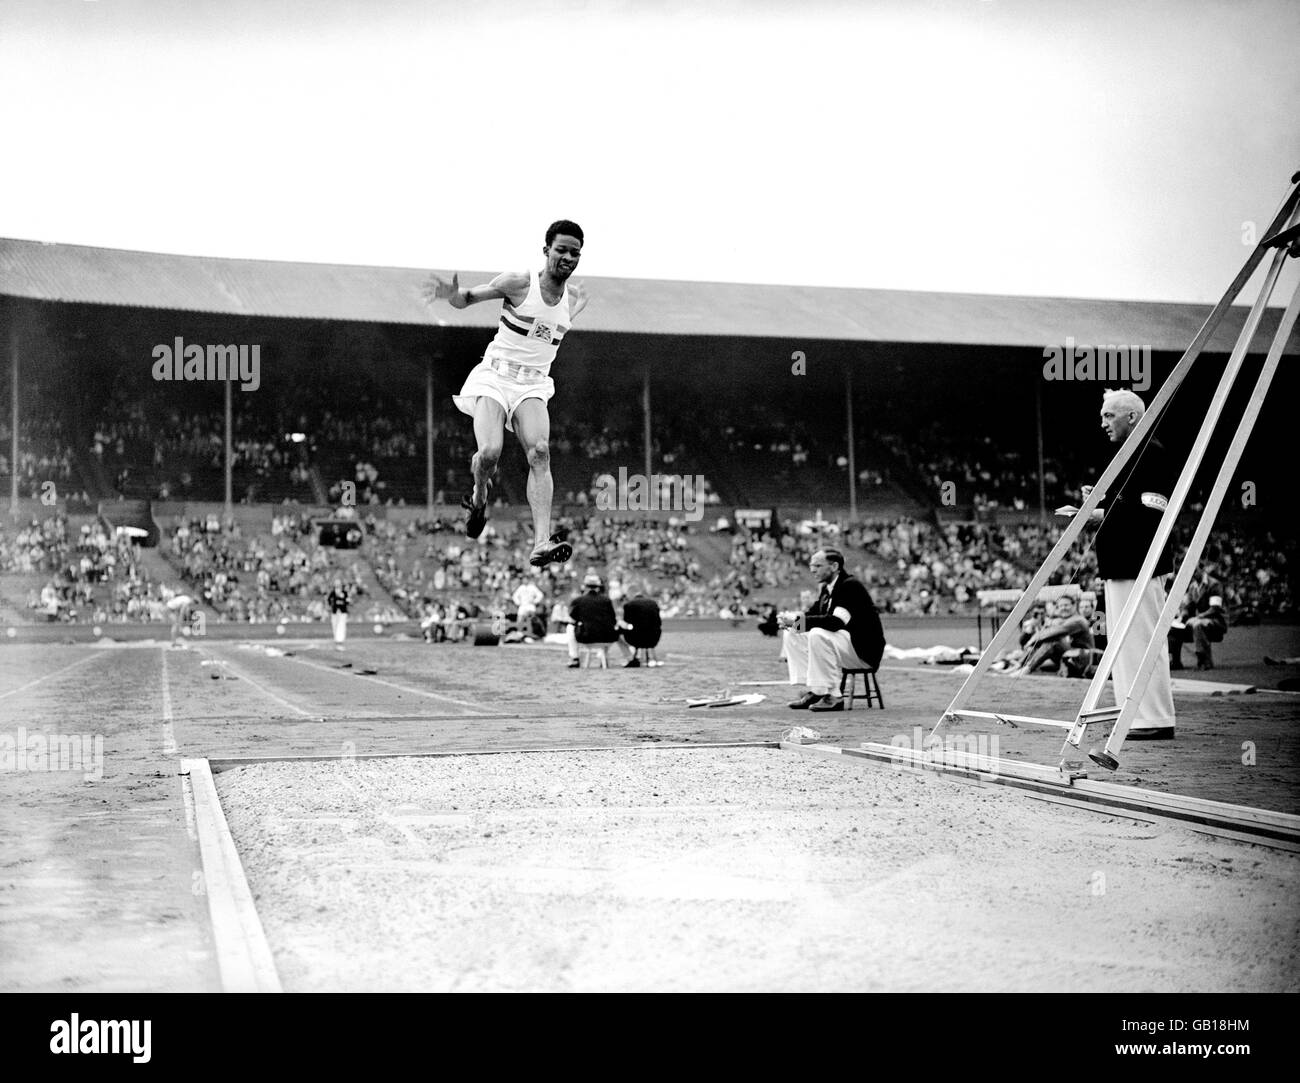 Jeux Olympiques de Londres 1948 - Athlétisme - long Jump - Wembley.Le prince Adegboyega Folaranmi Adedoyin concurrence la Grande-Bretagne dans le long Jump. Banque D'Images